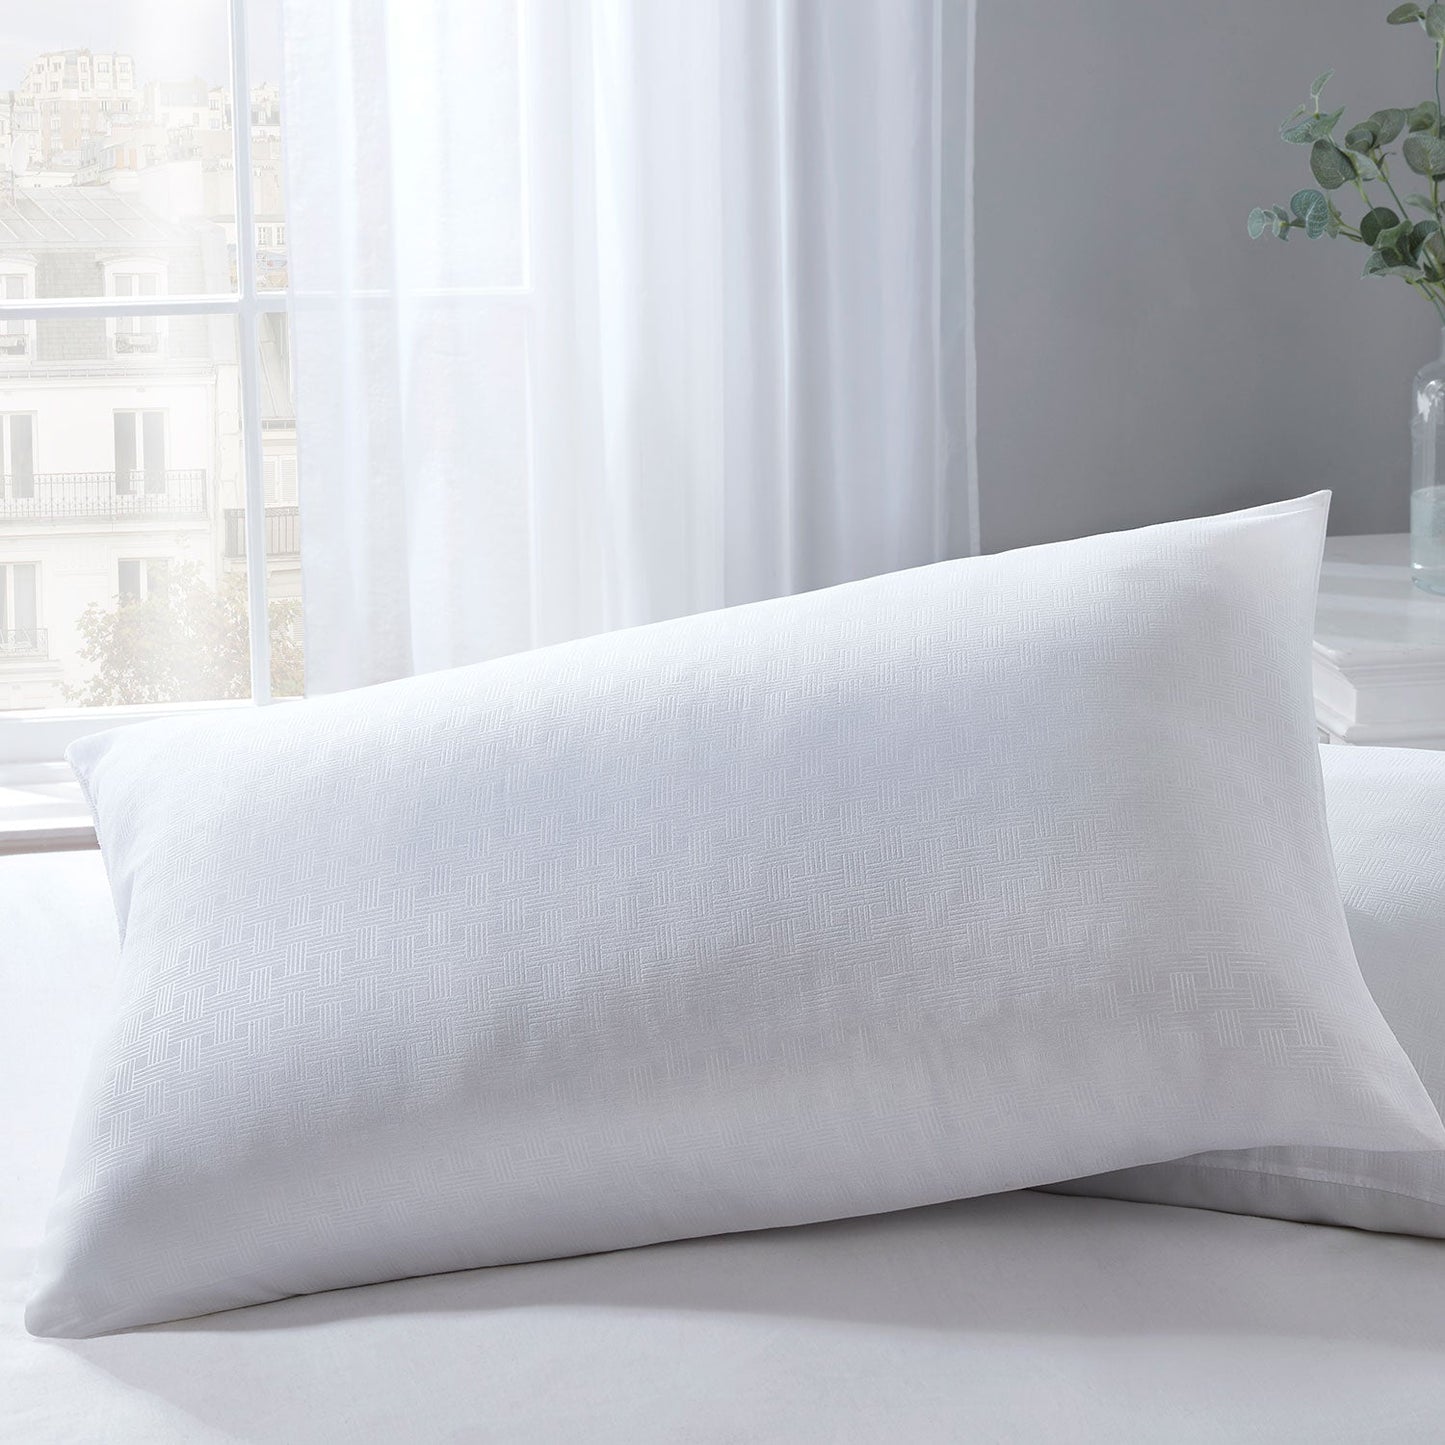 Sleep Easy Pillow Pair - Medium Support